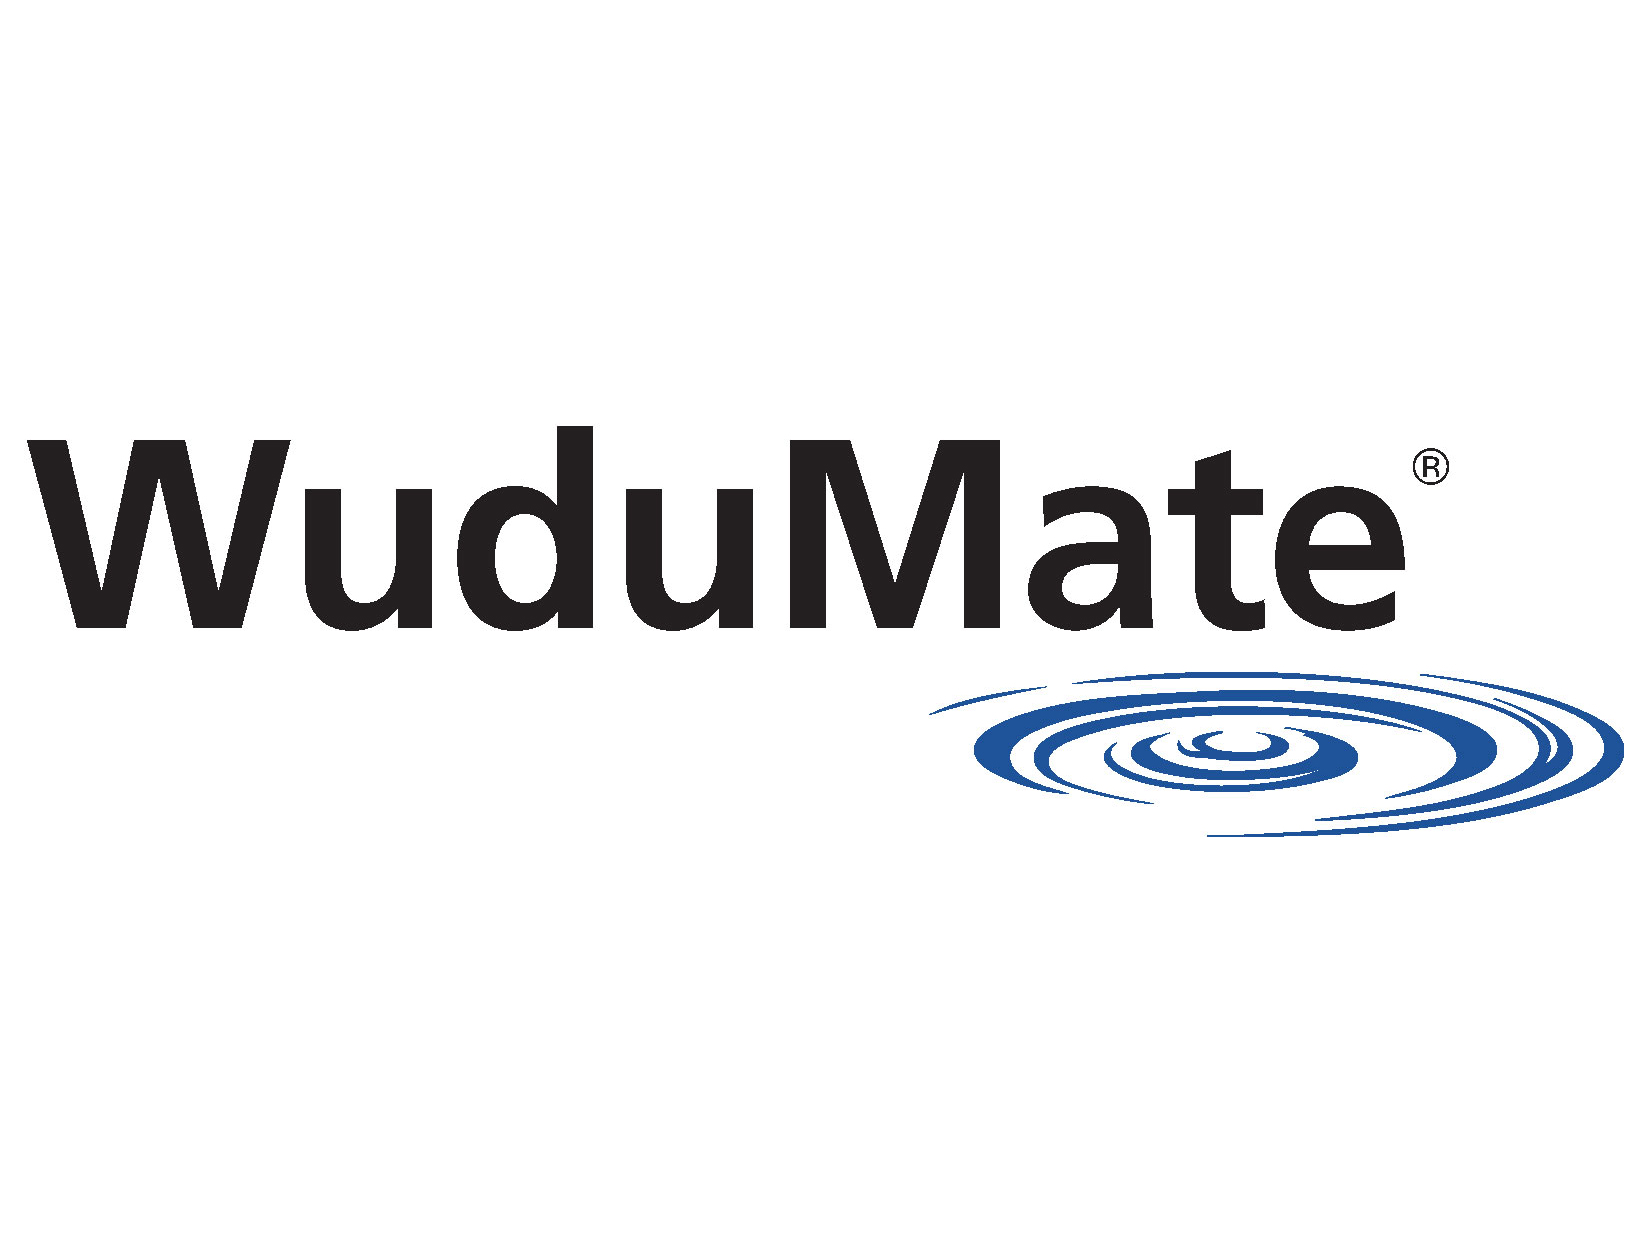 WuduMate